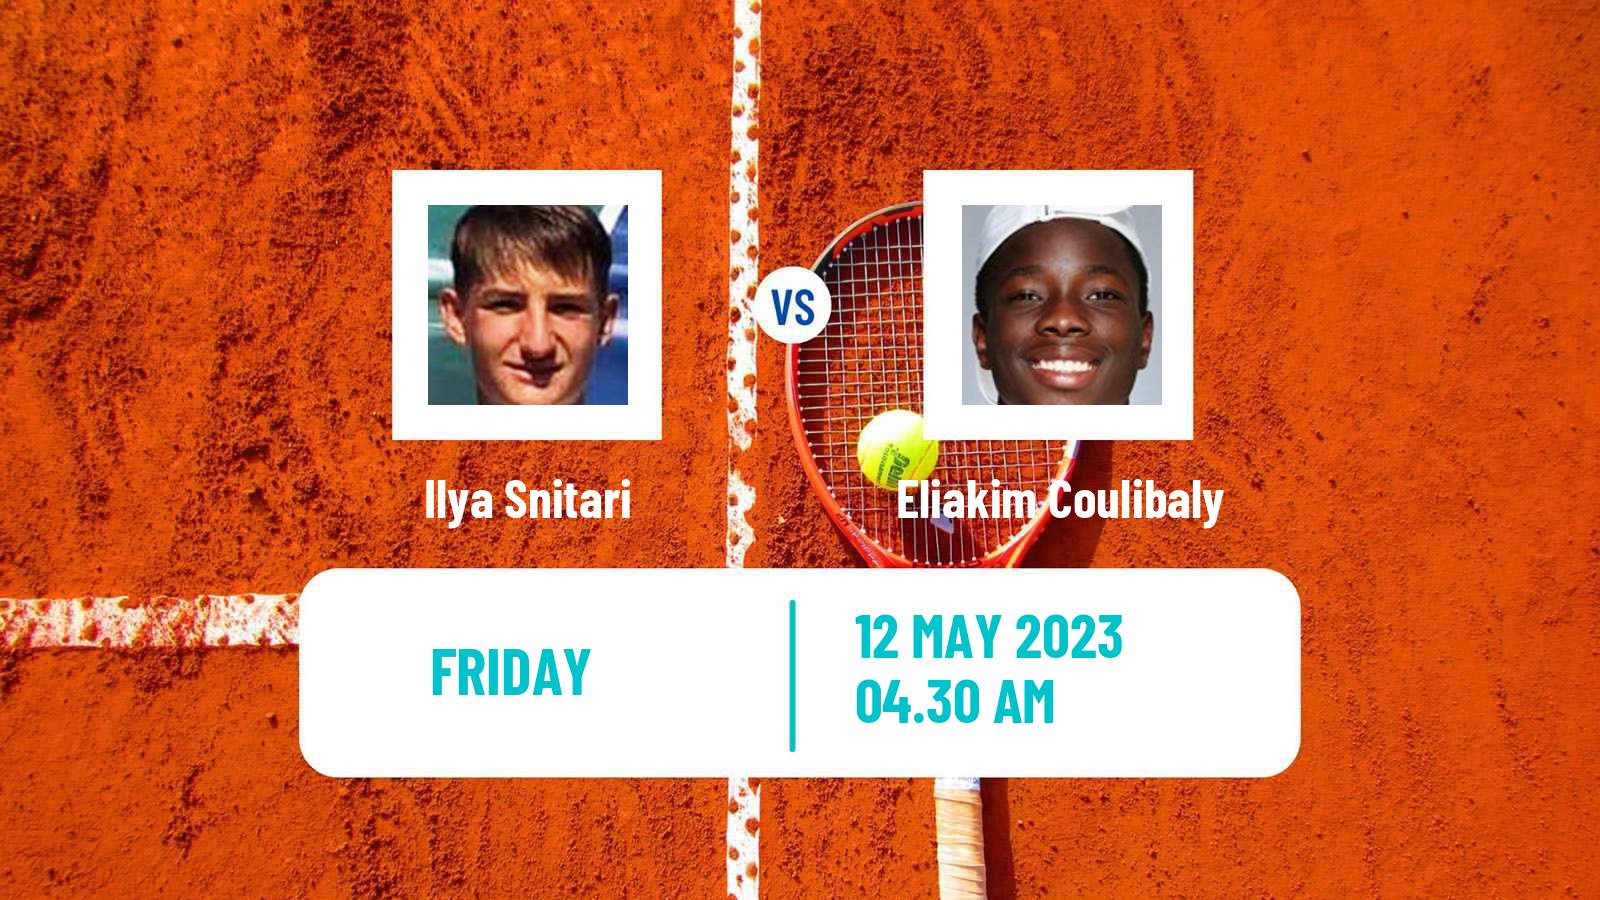 Tennis ITF Tournaments Ilya Snitari - Eliakim Coulibaly